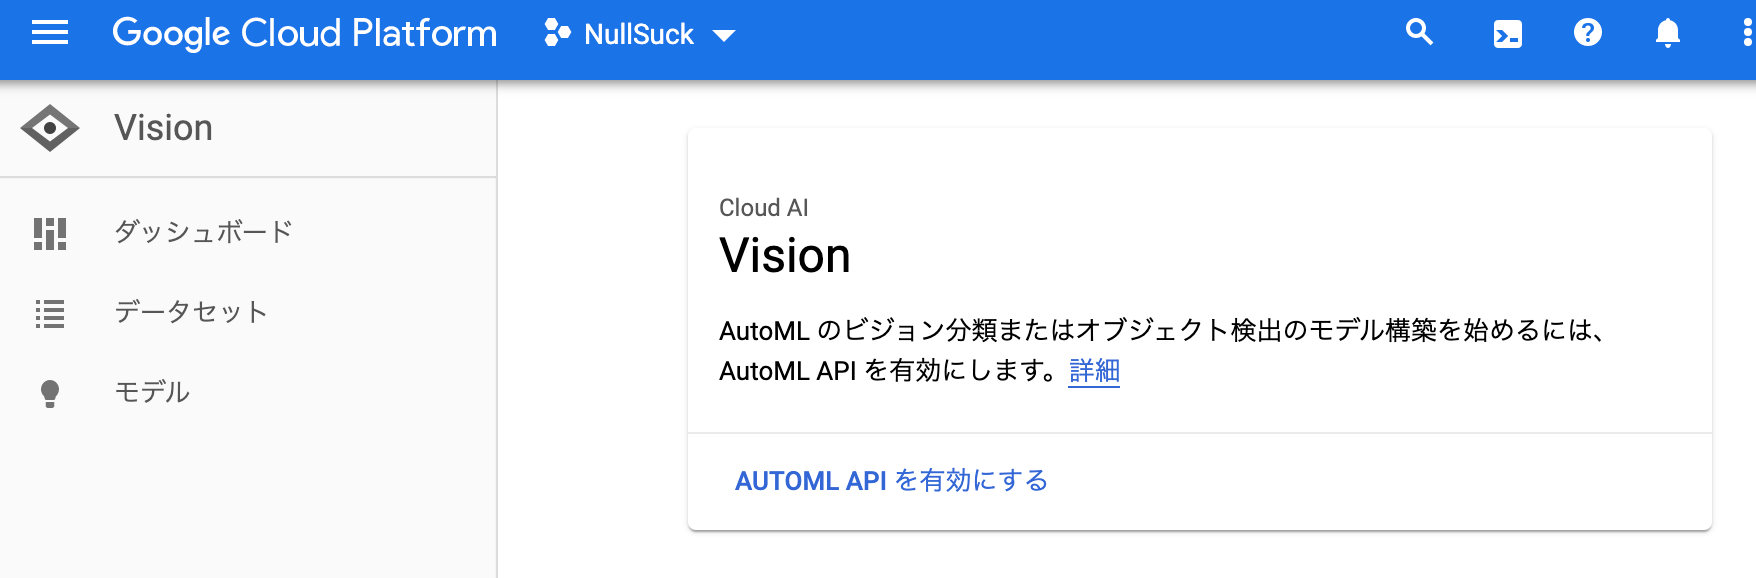 Vision_–_NullSuck_–_Google_Cloud_Platform.png